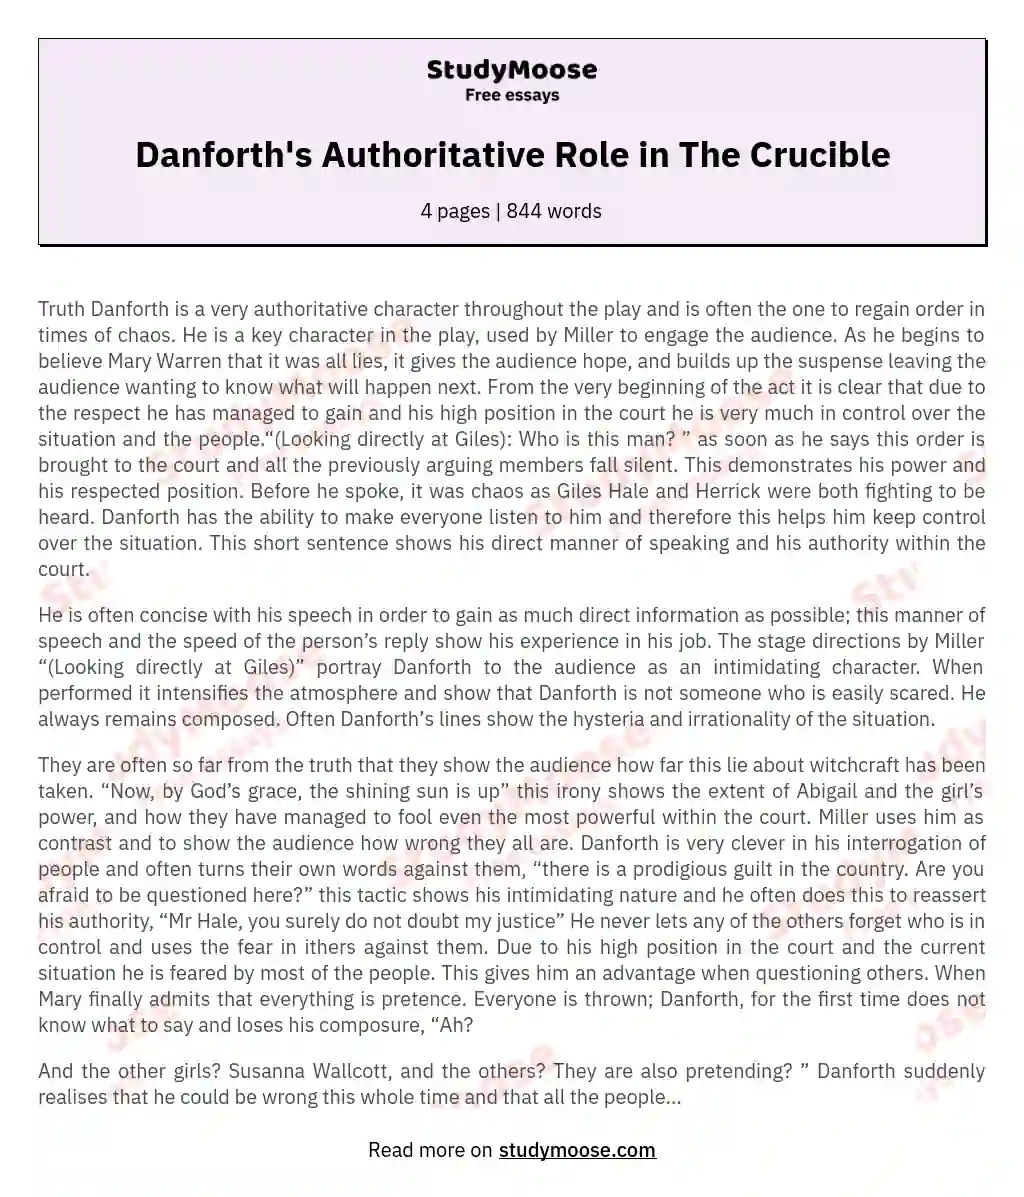 Danforth's Authoritative Role in The Crucible essay